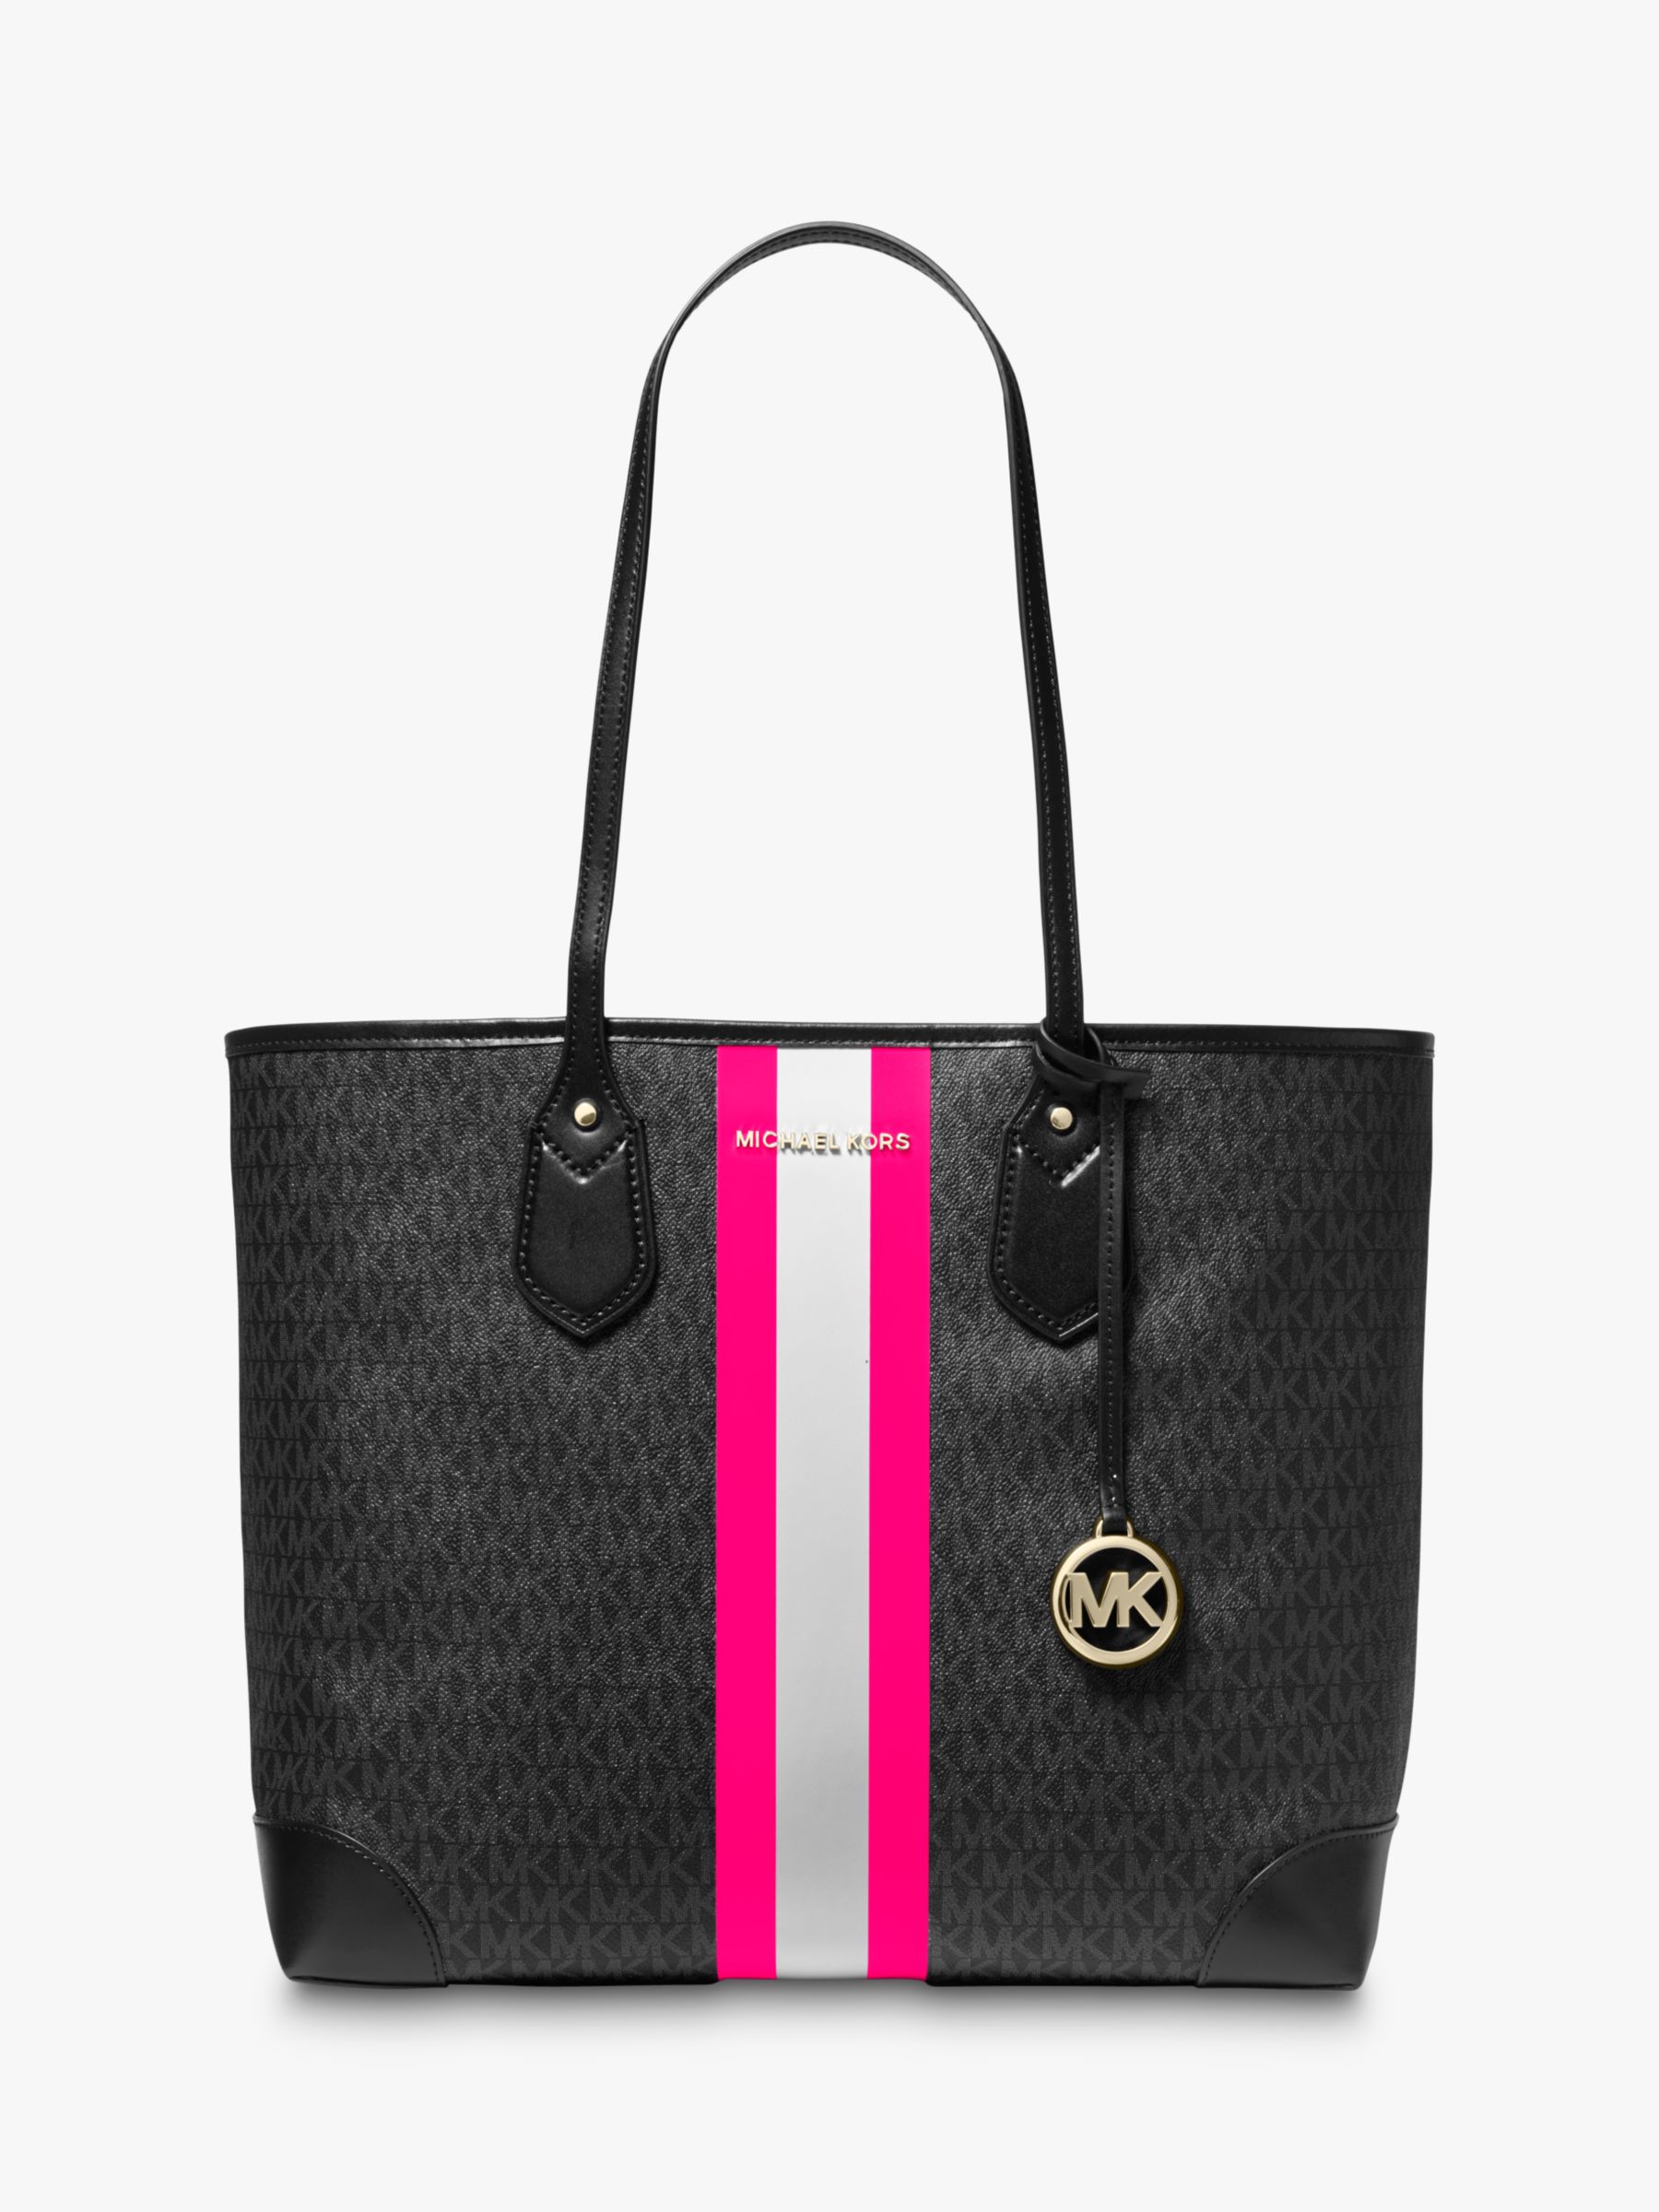 pink and black michael kors purse